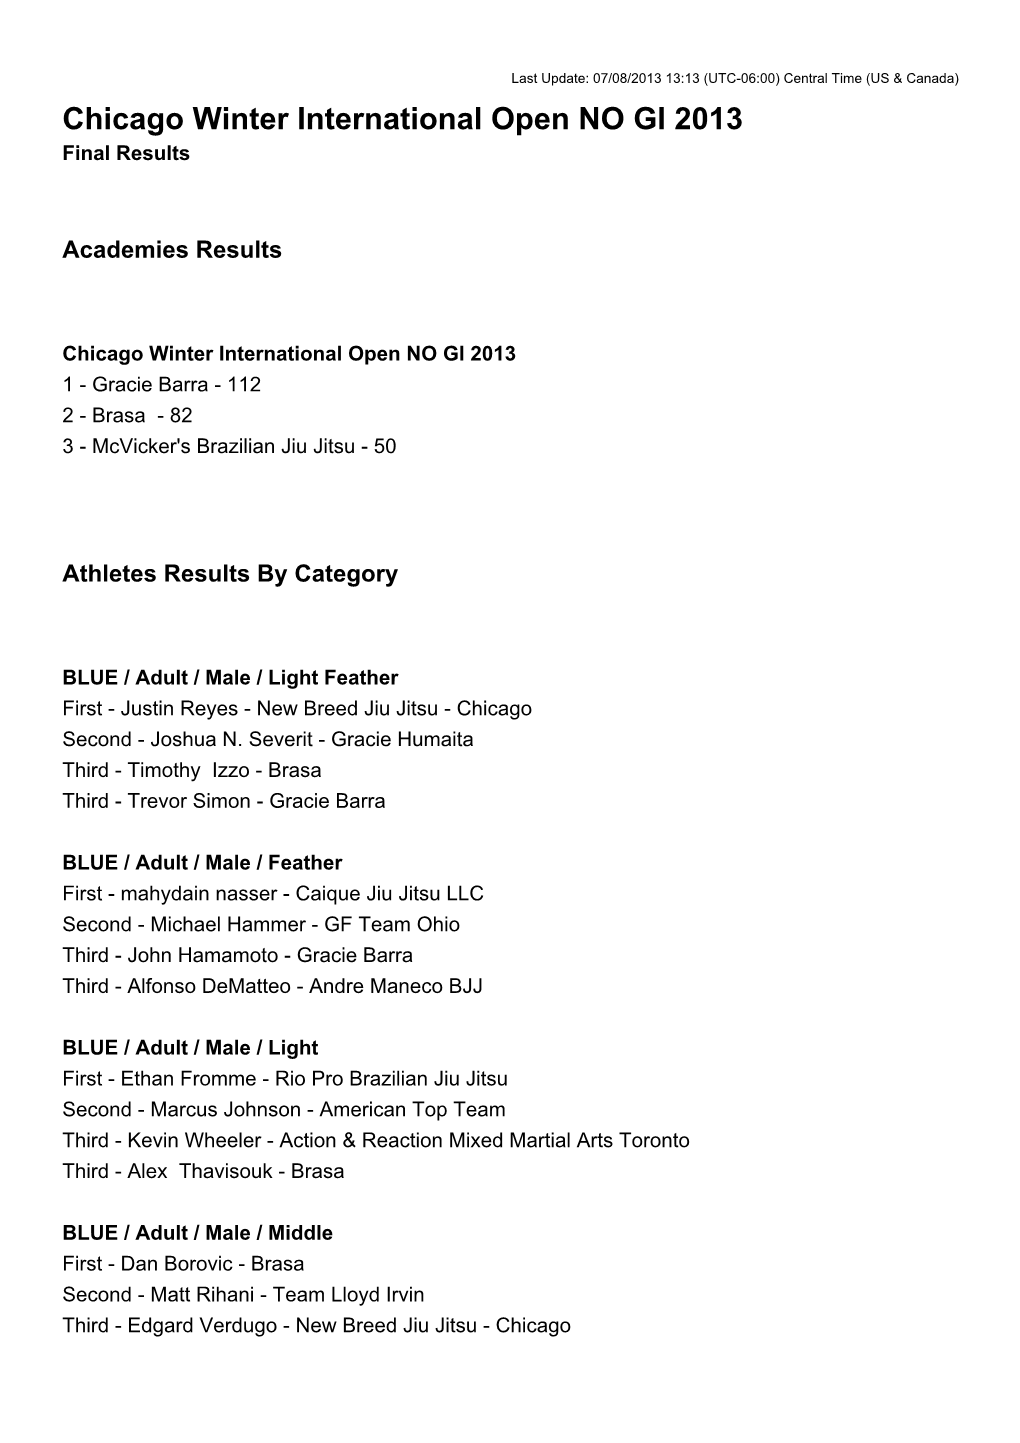 Chicago Winter International Open NO GI 2013 Final Results